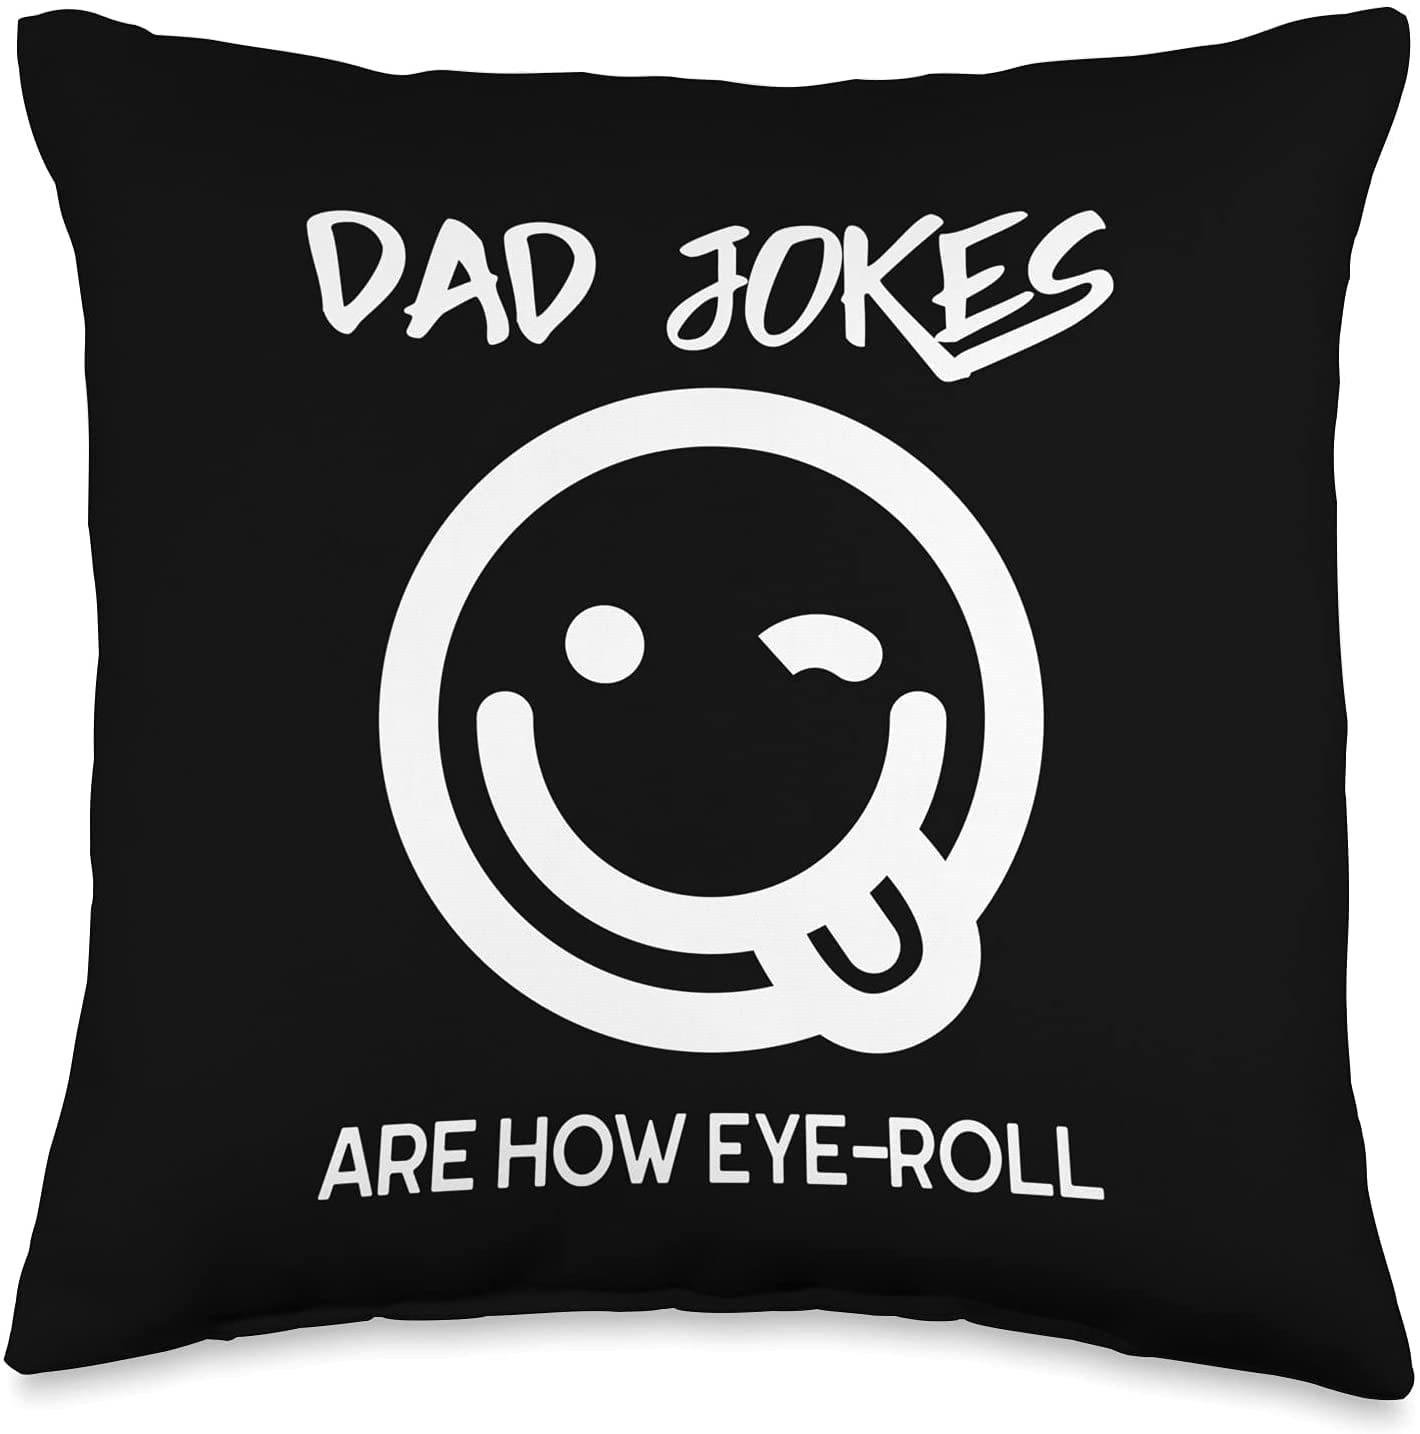 Funny dad jokes throw pillow